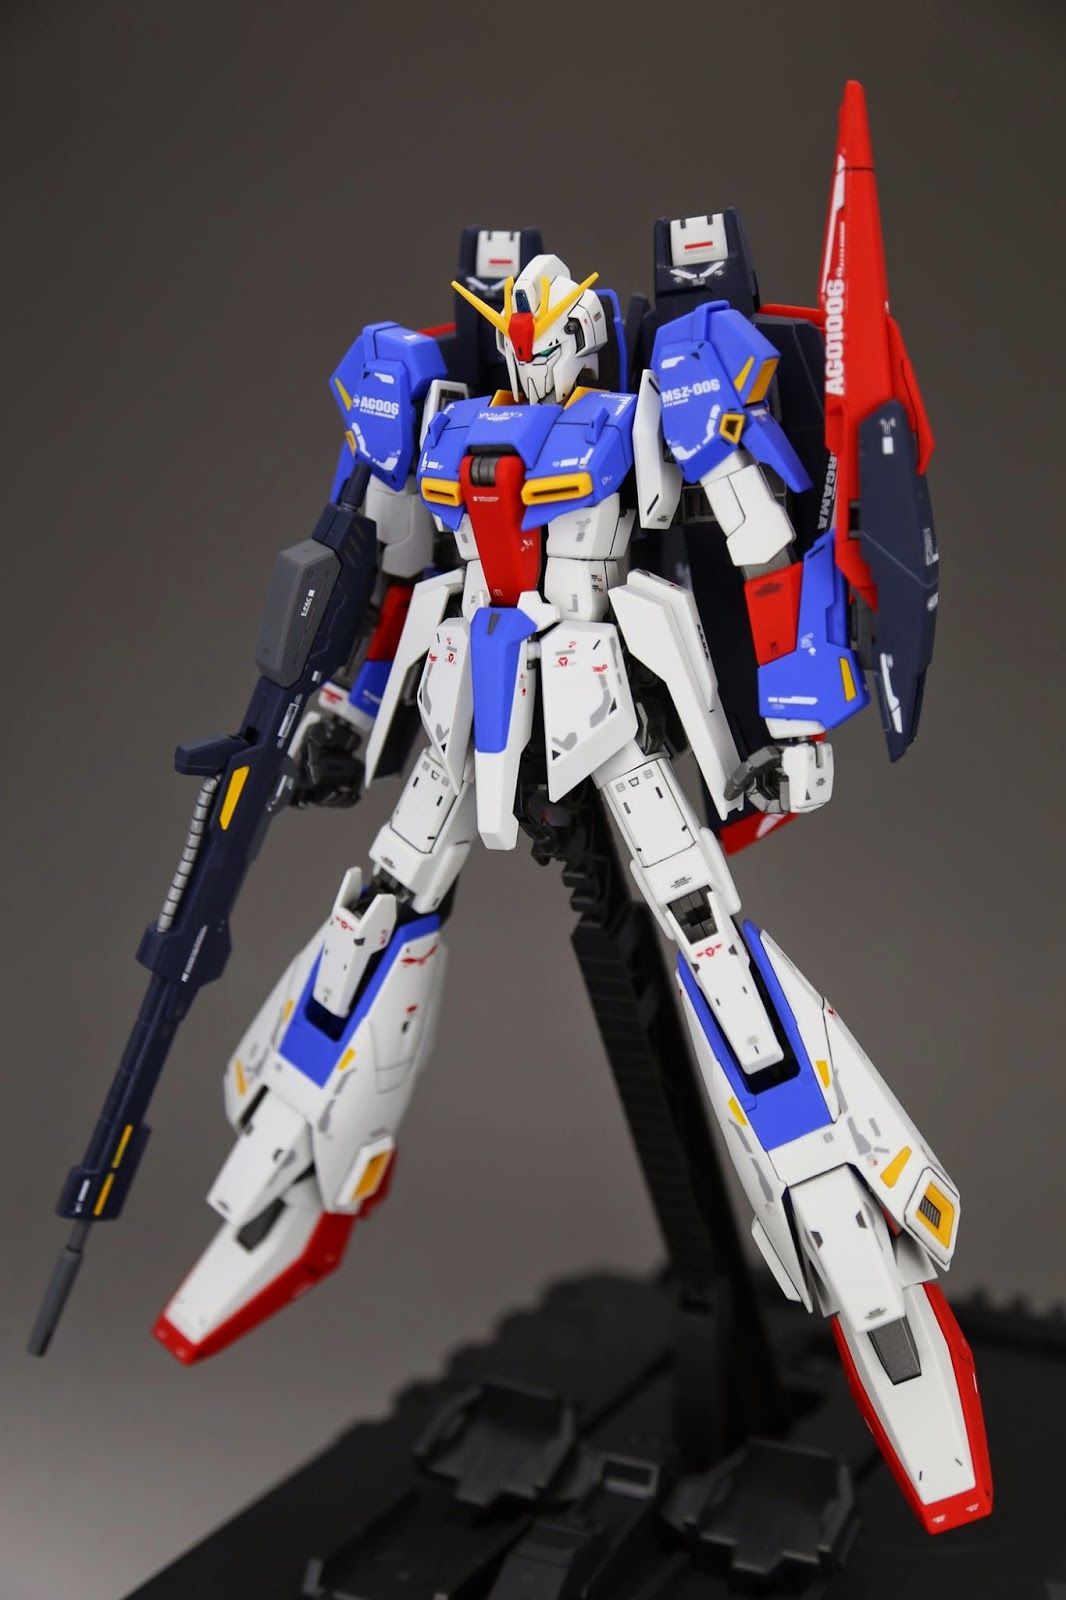 Gundam Family: MG 1/100 MSZ-006 Zeta Gundam v2.0 Painted Build